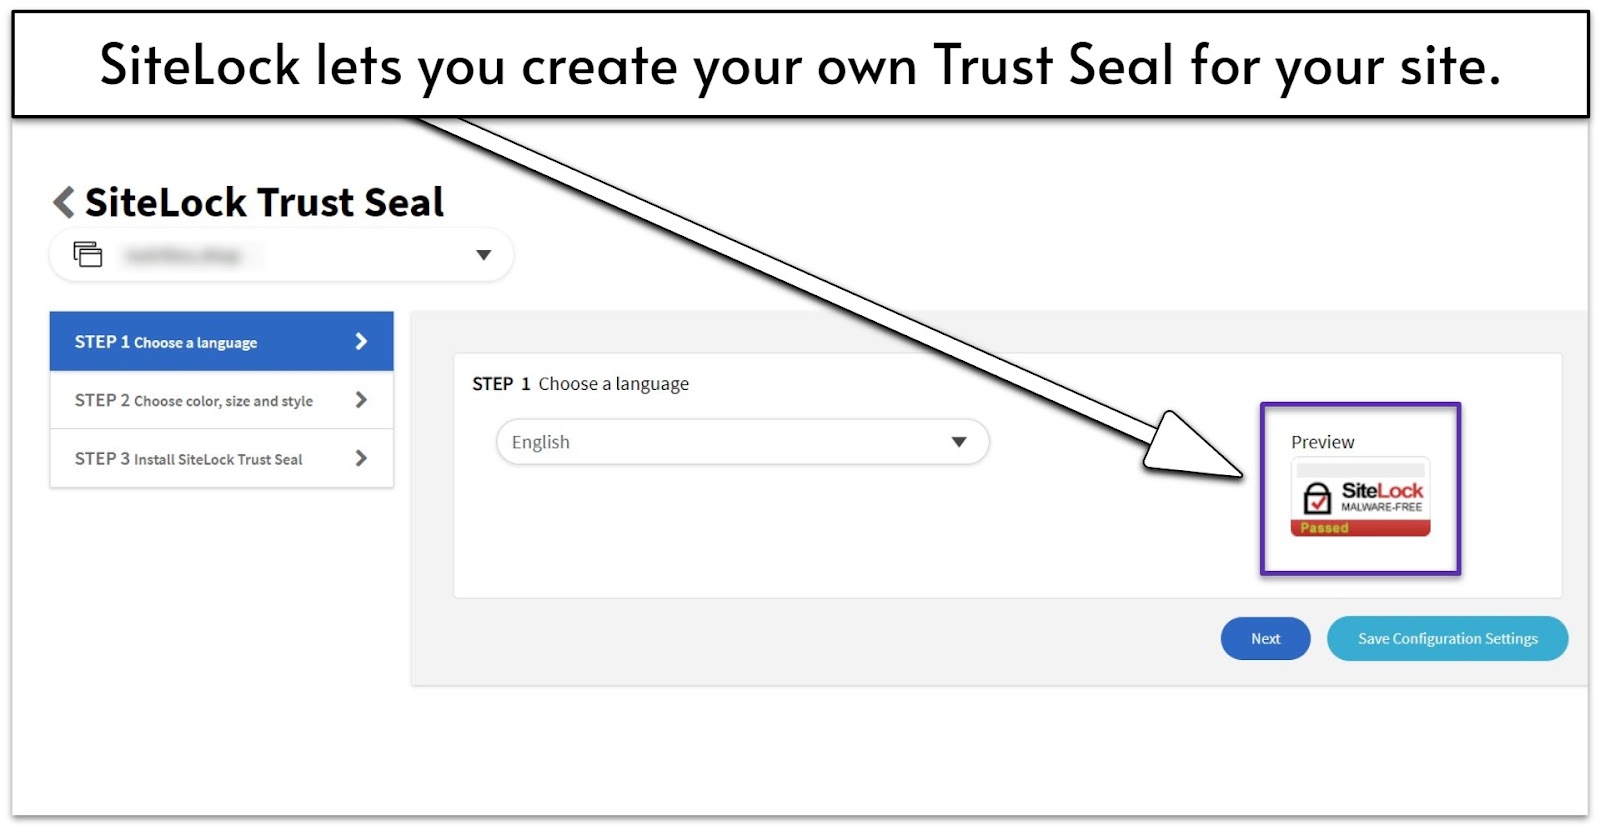 Free SiteLock Trust Seal deployment tool with a SiteLock Scanner Lite plan on all Vercaa hosting plans